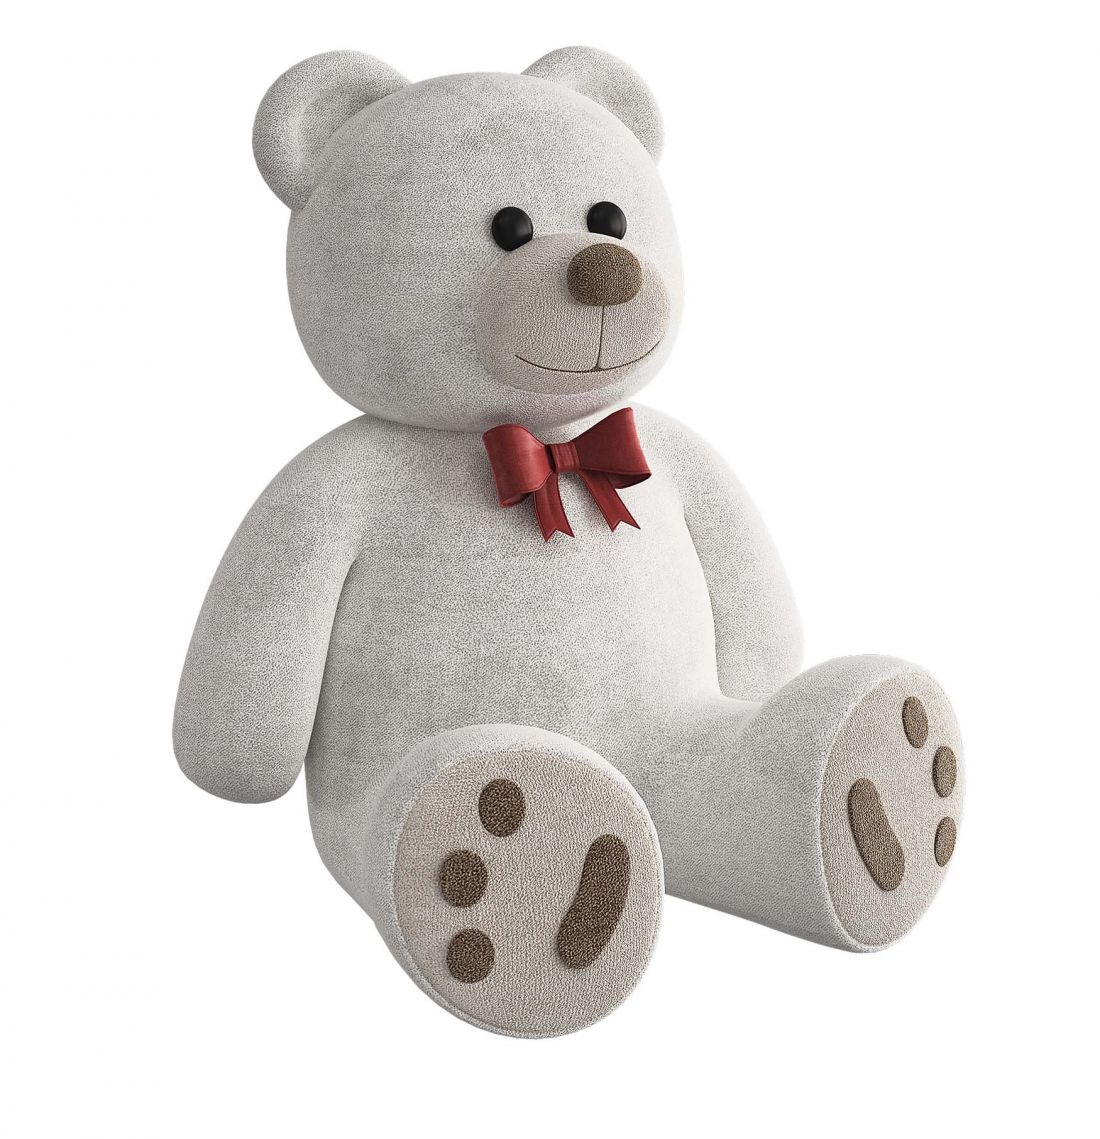 new model teddy bear